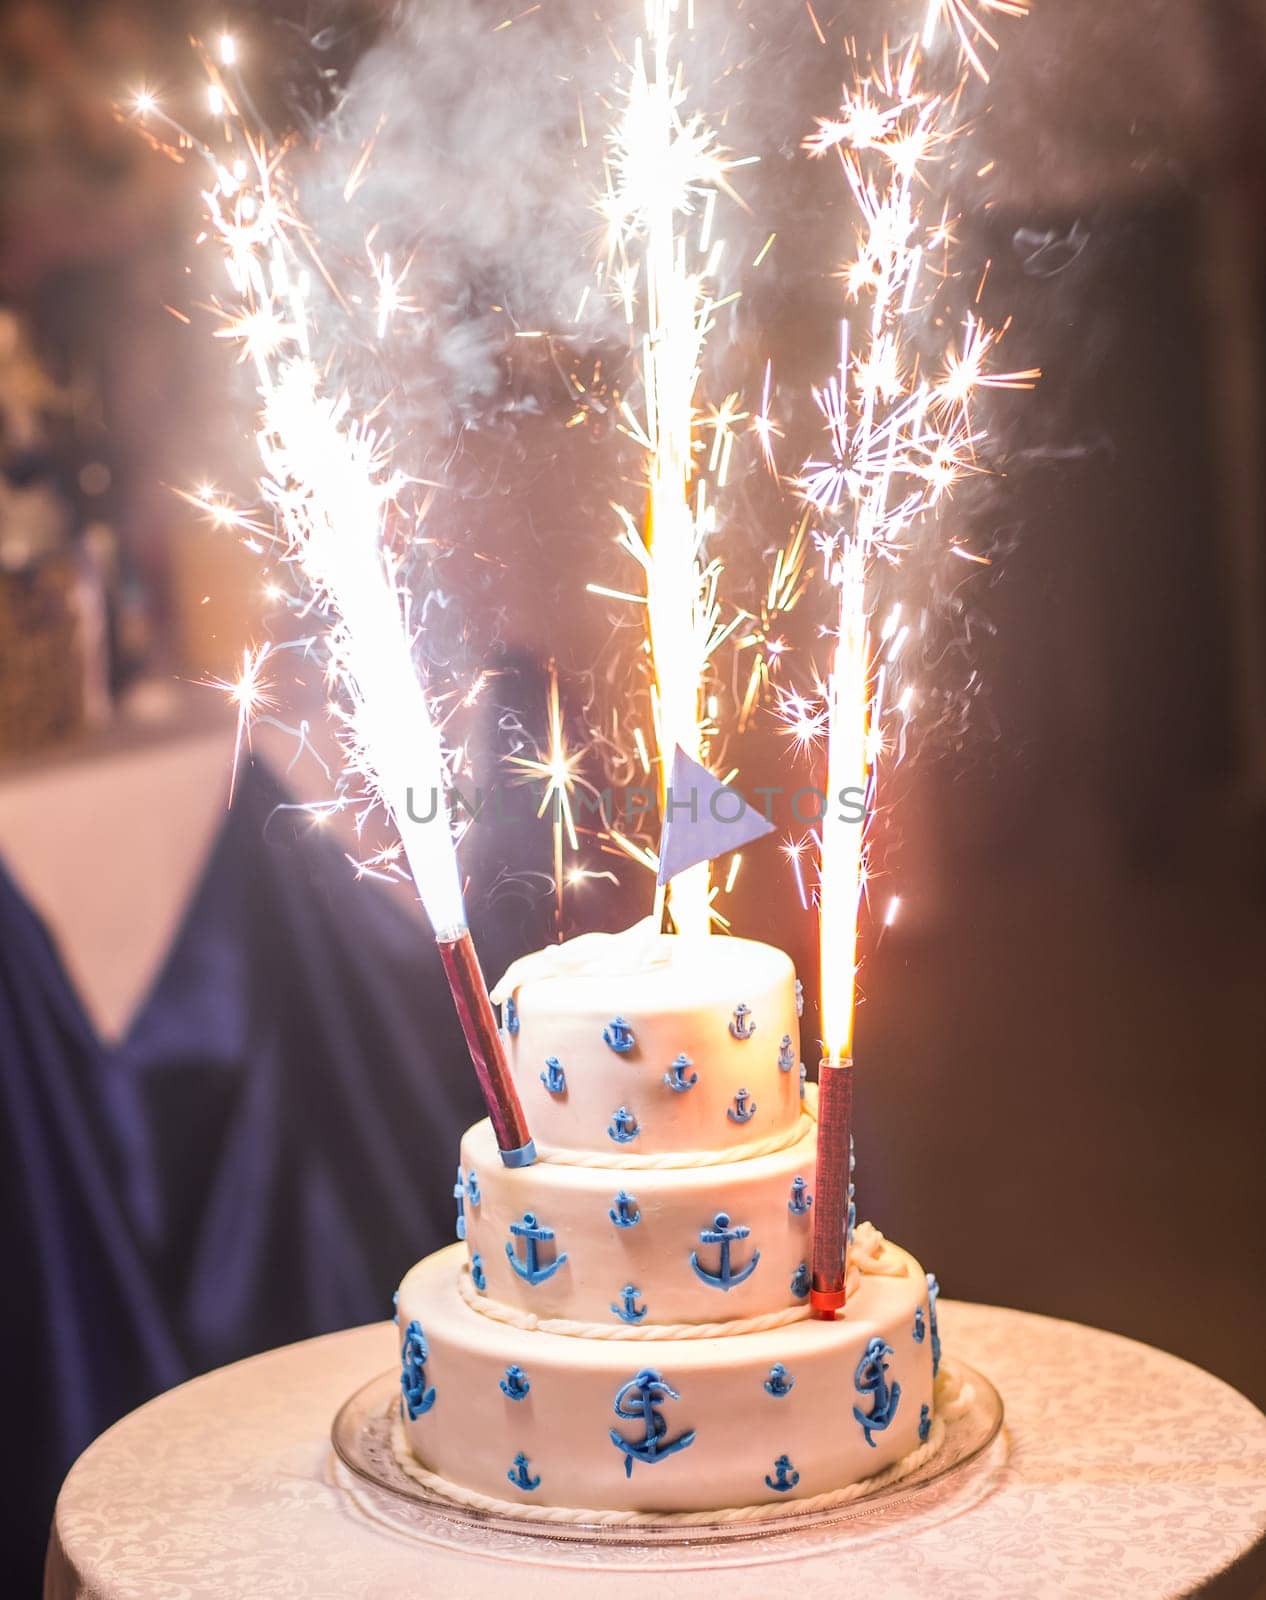 White and Blue Wedding Cake. cake for the newlyweds